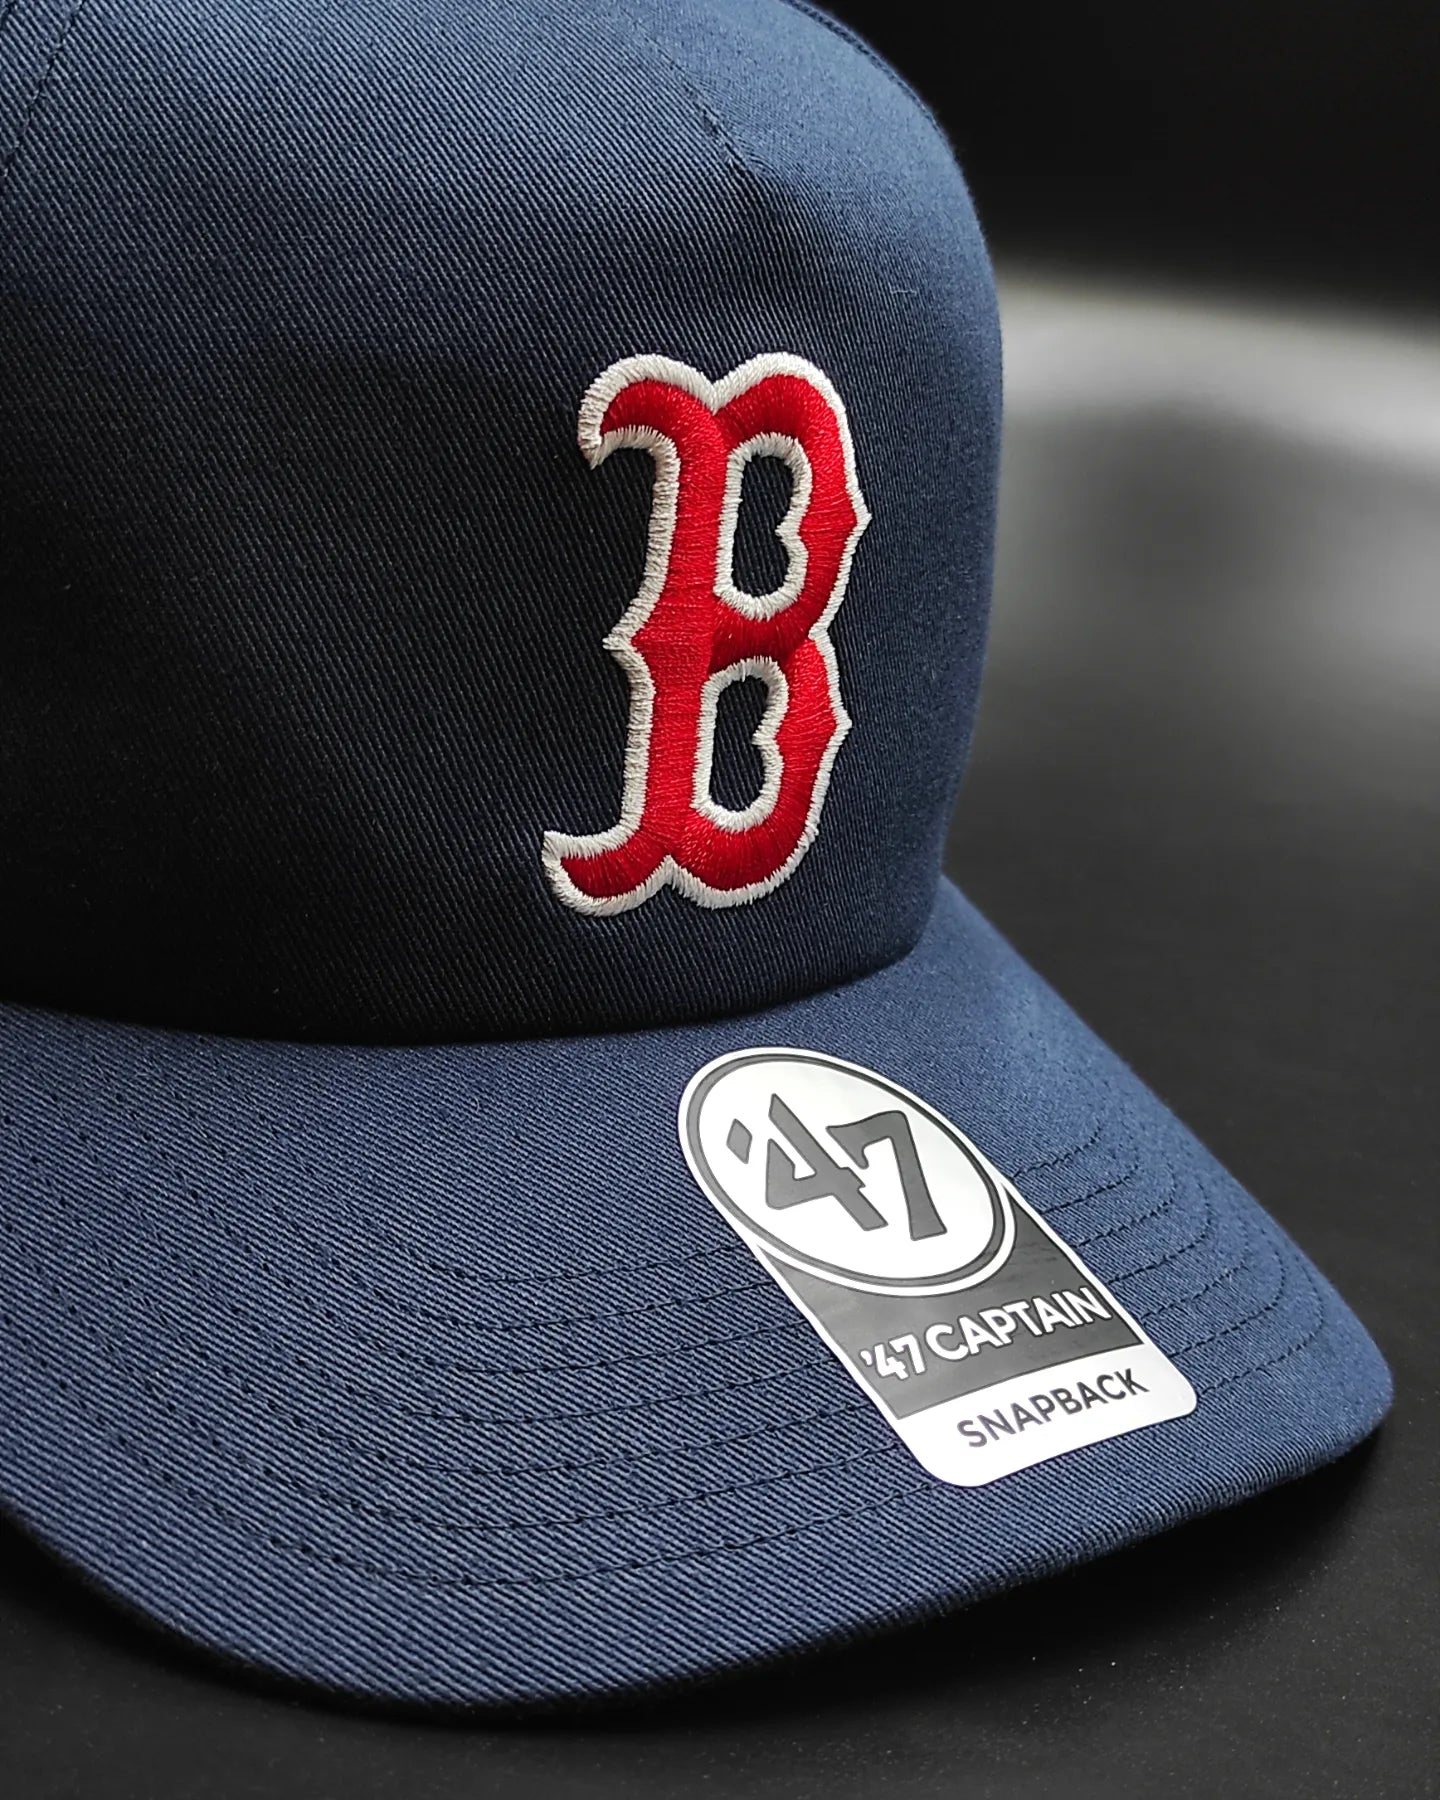 47brand Boston Red Sox navy nantasket captain snapback hat